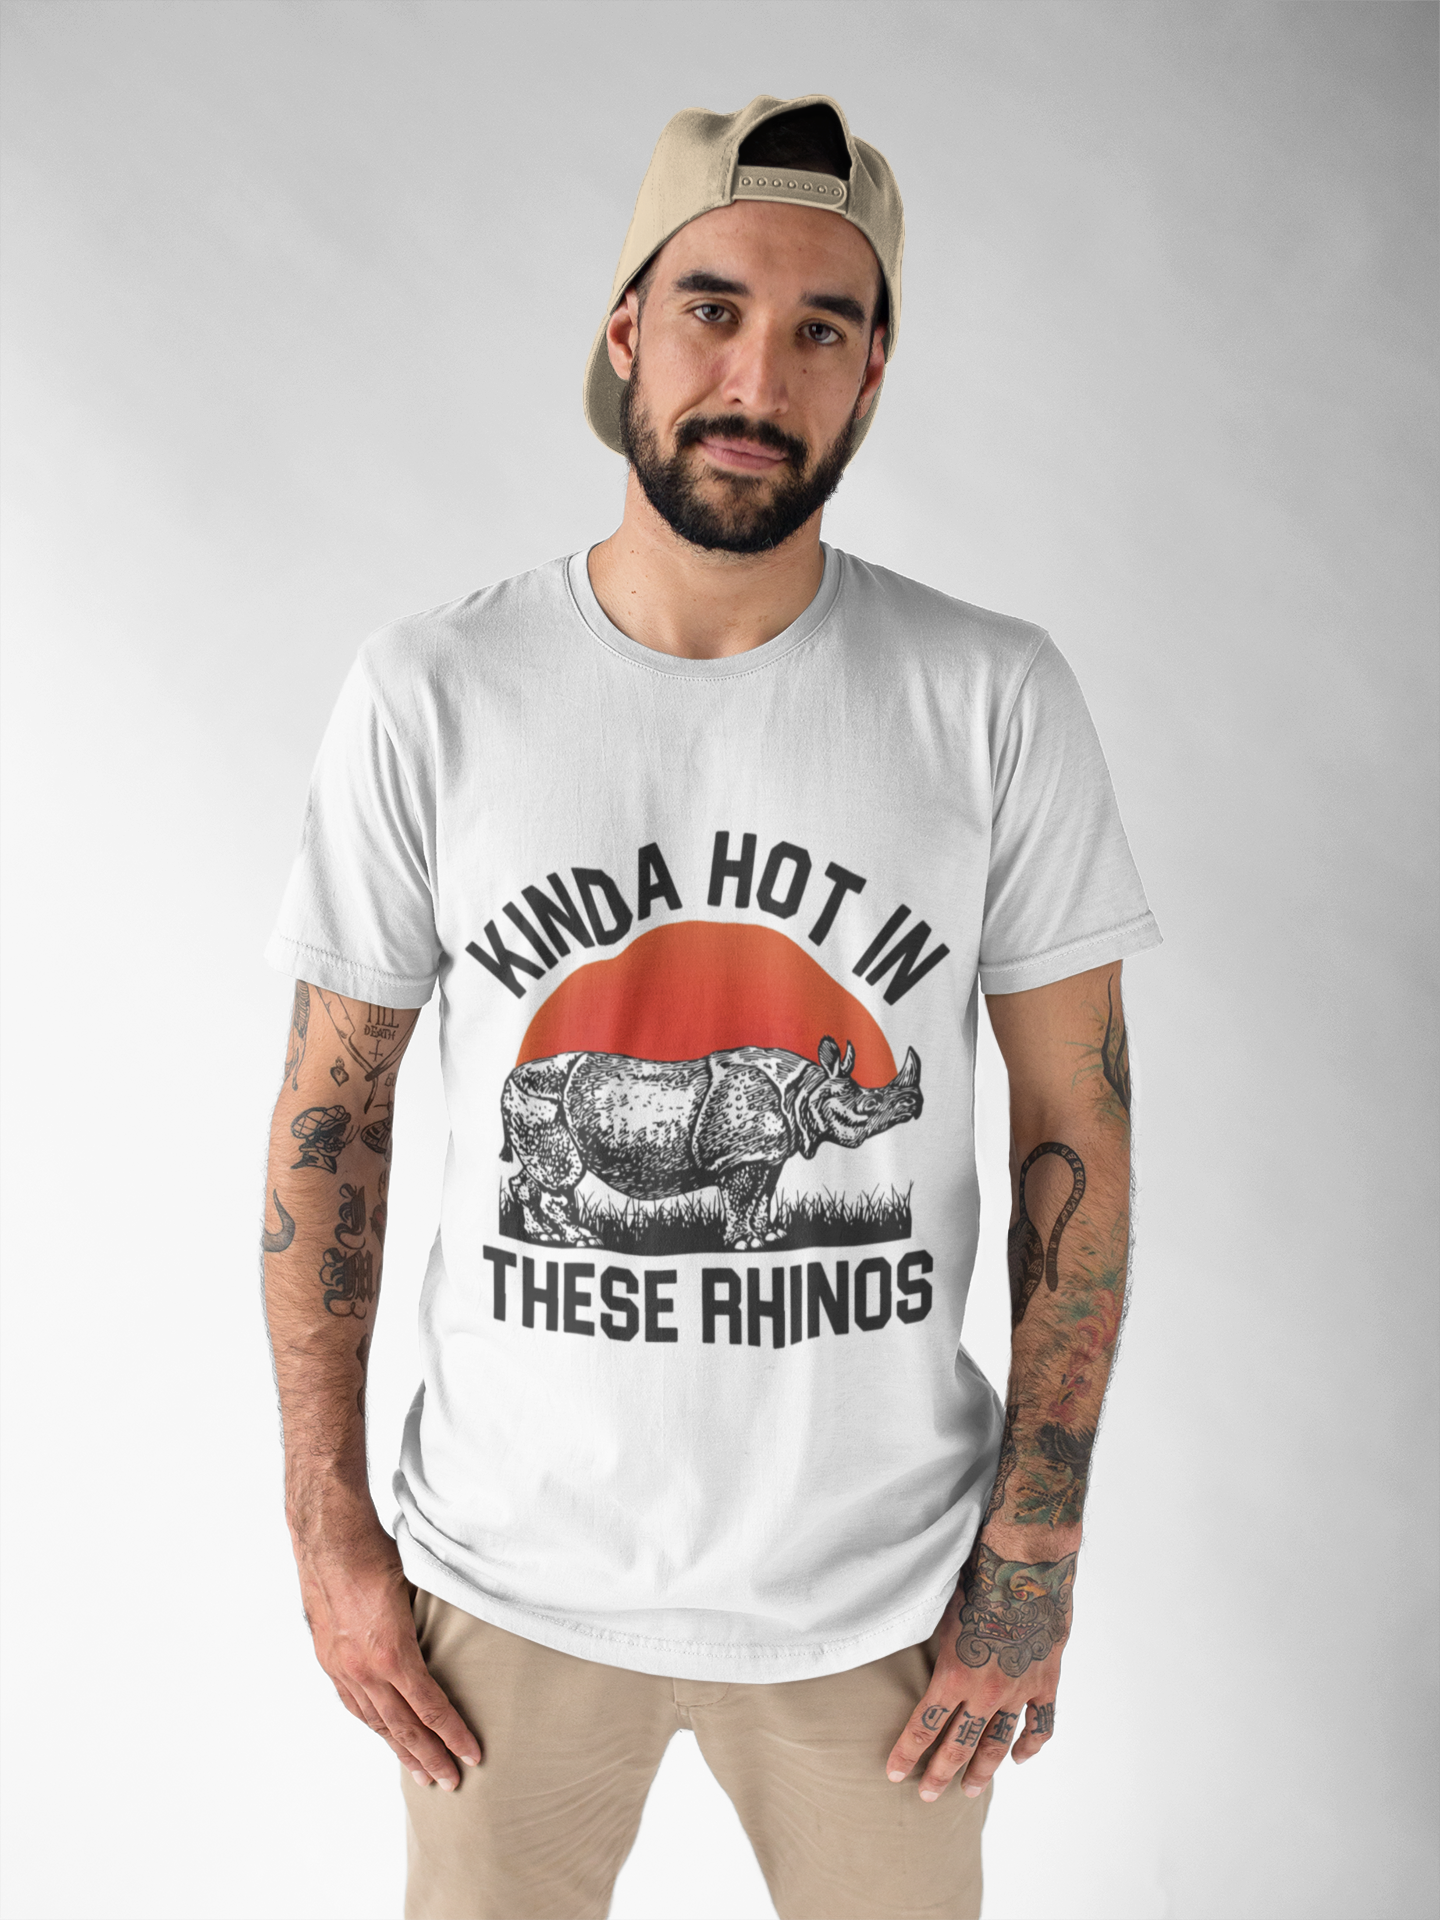 Ace Ventura Pet Detective T Shirt, Rhinos T Shirt, Kinda Hot In These Rhinos Tshirt